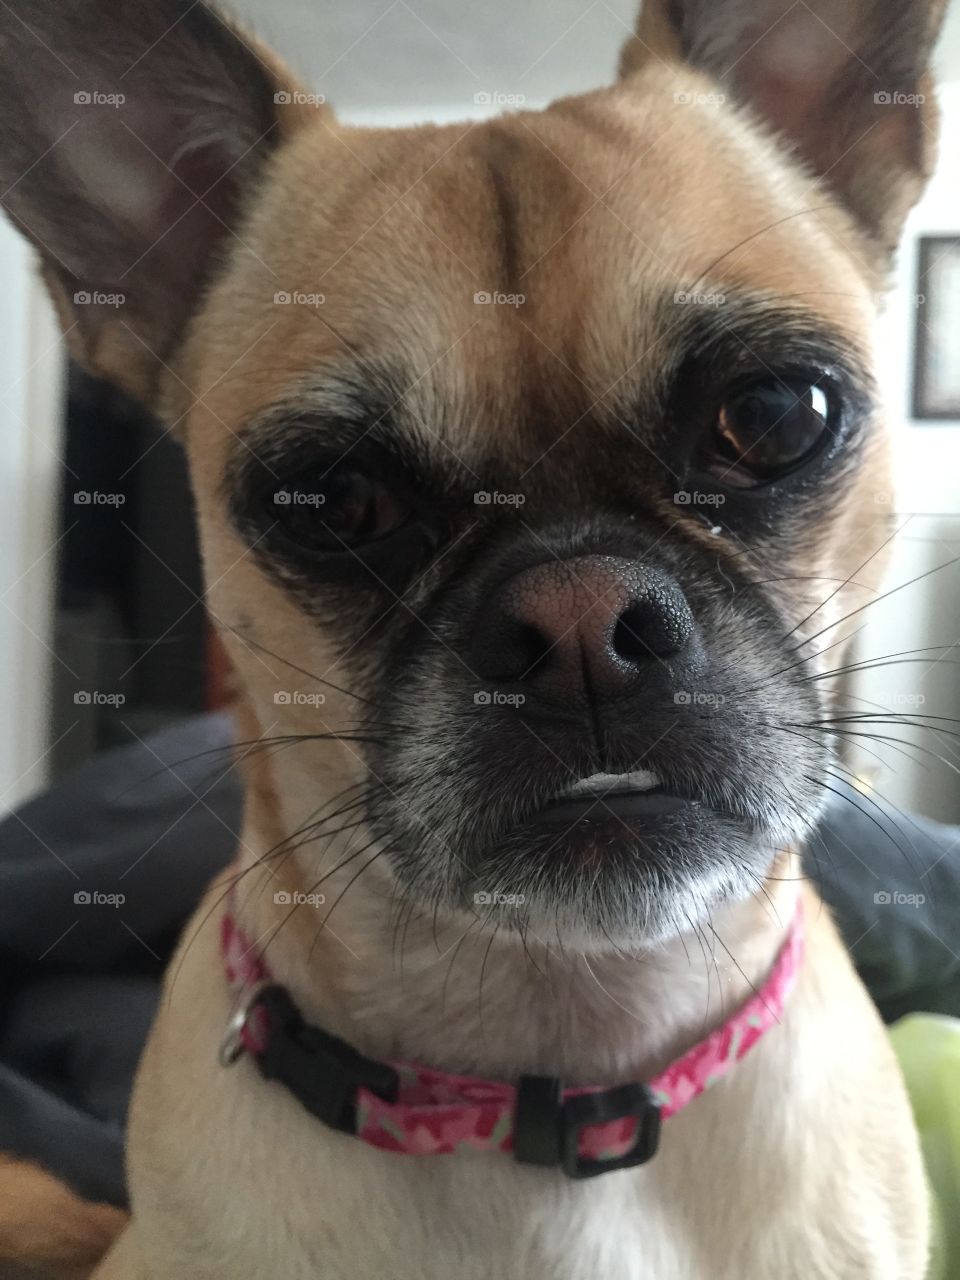 my dog Khloe - she won Americas funniest home videos as the "lipstick dog"